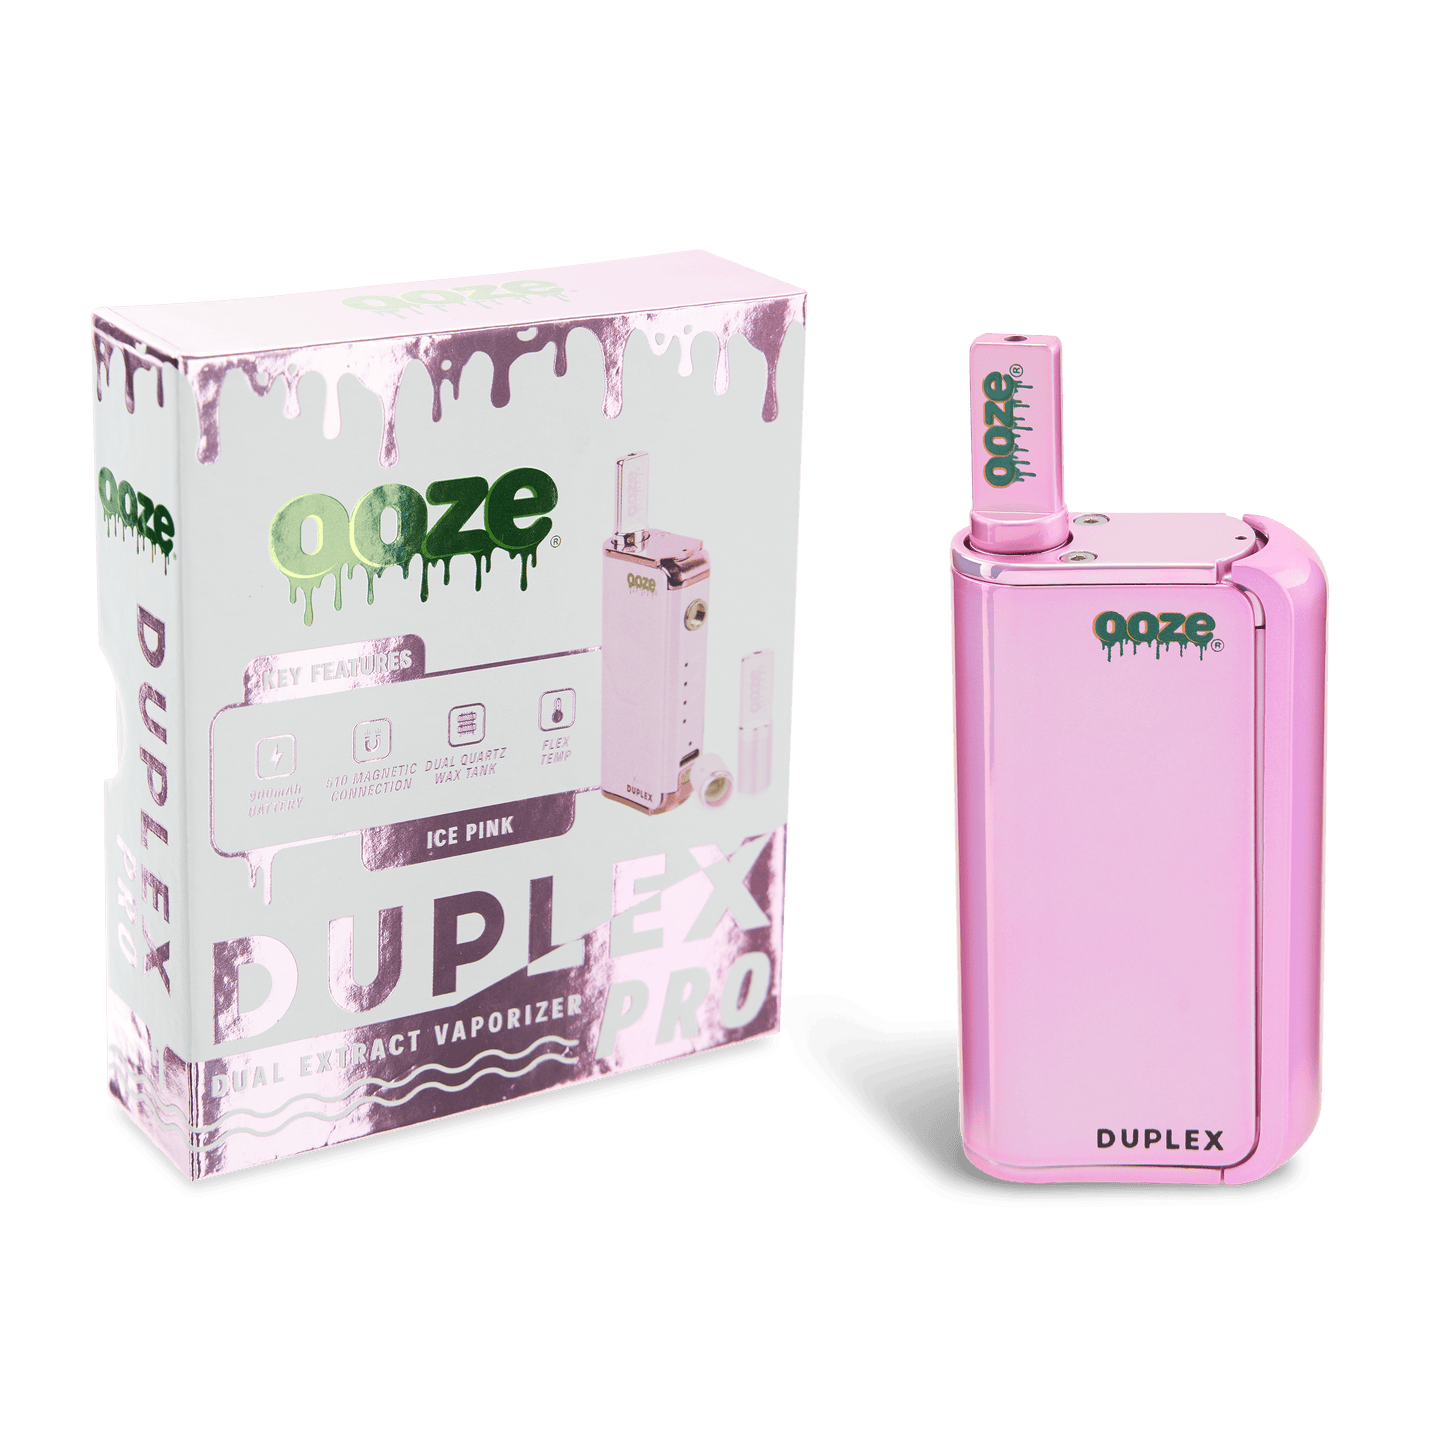 Ooze Batteries and Vapes Ice Pink Ooze Duplex Pro – 900 mAh – Cartridge & Wax Vaporizer